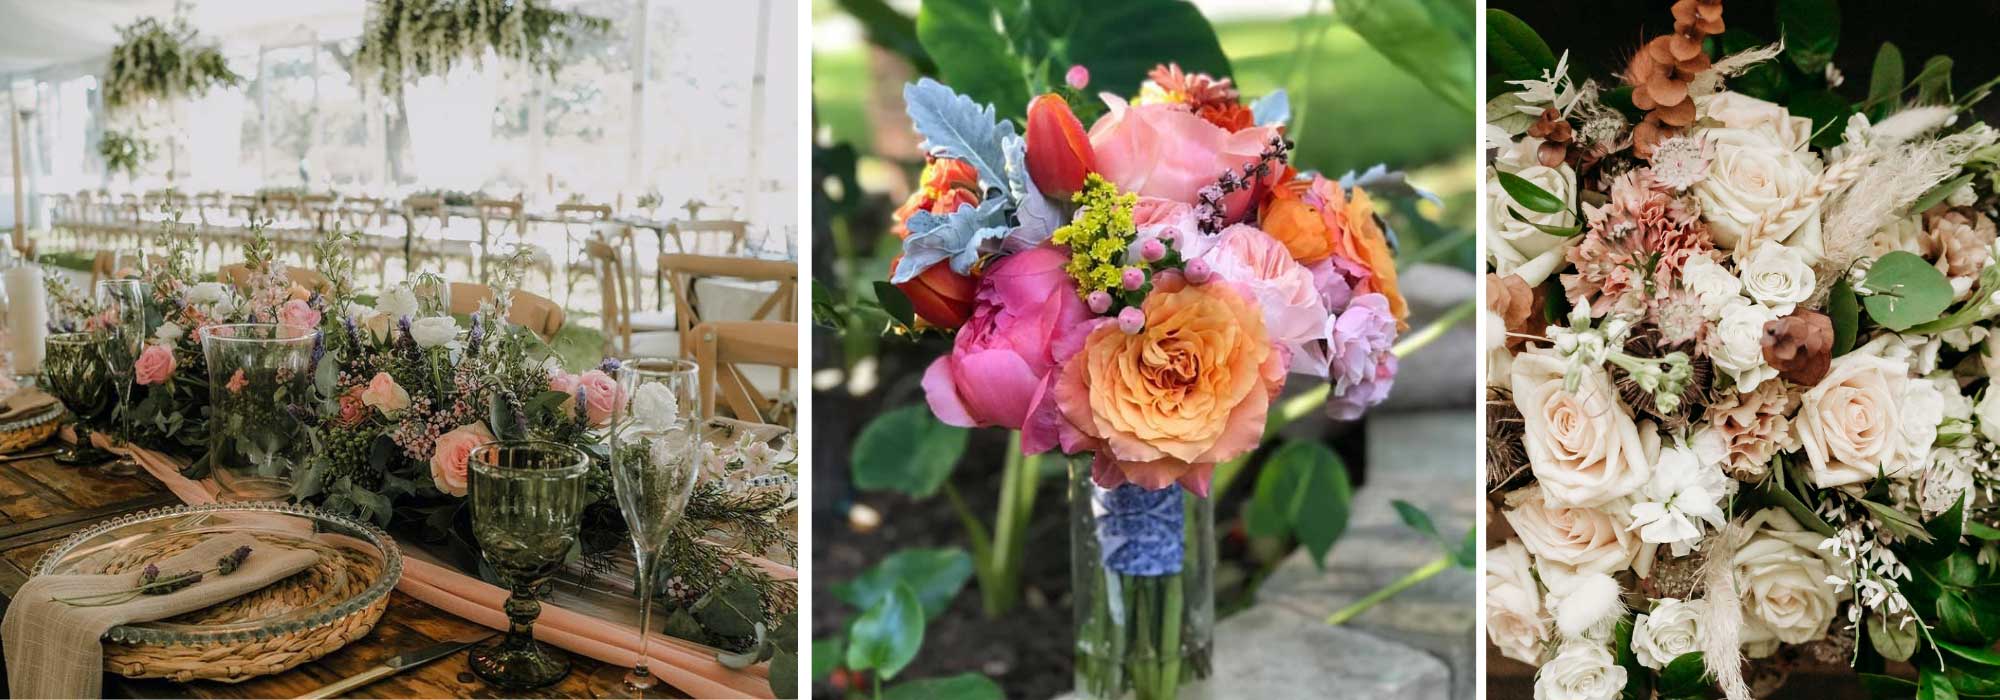 sweet-magnolias-event-wedding-florist-savannah-hilton-head-bluffton-hardeeville-sc